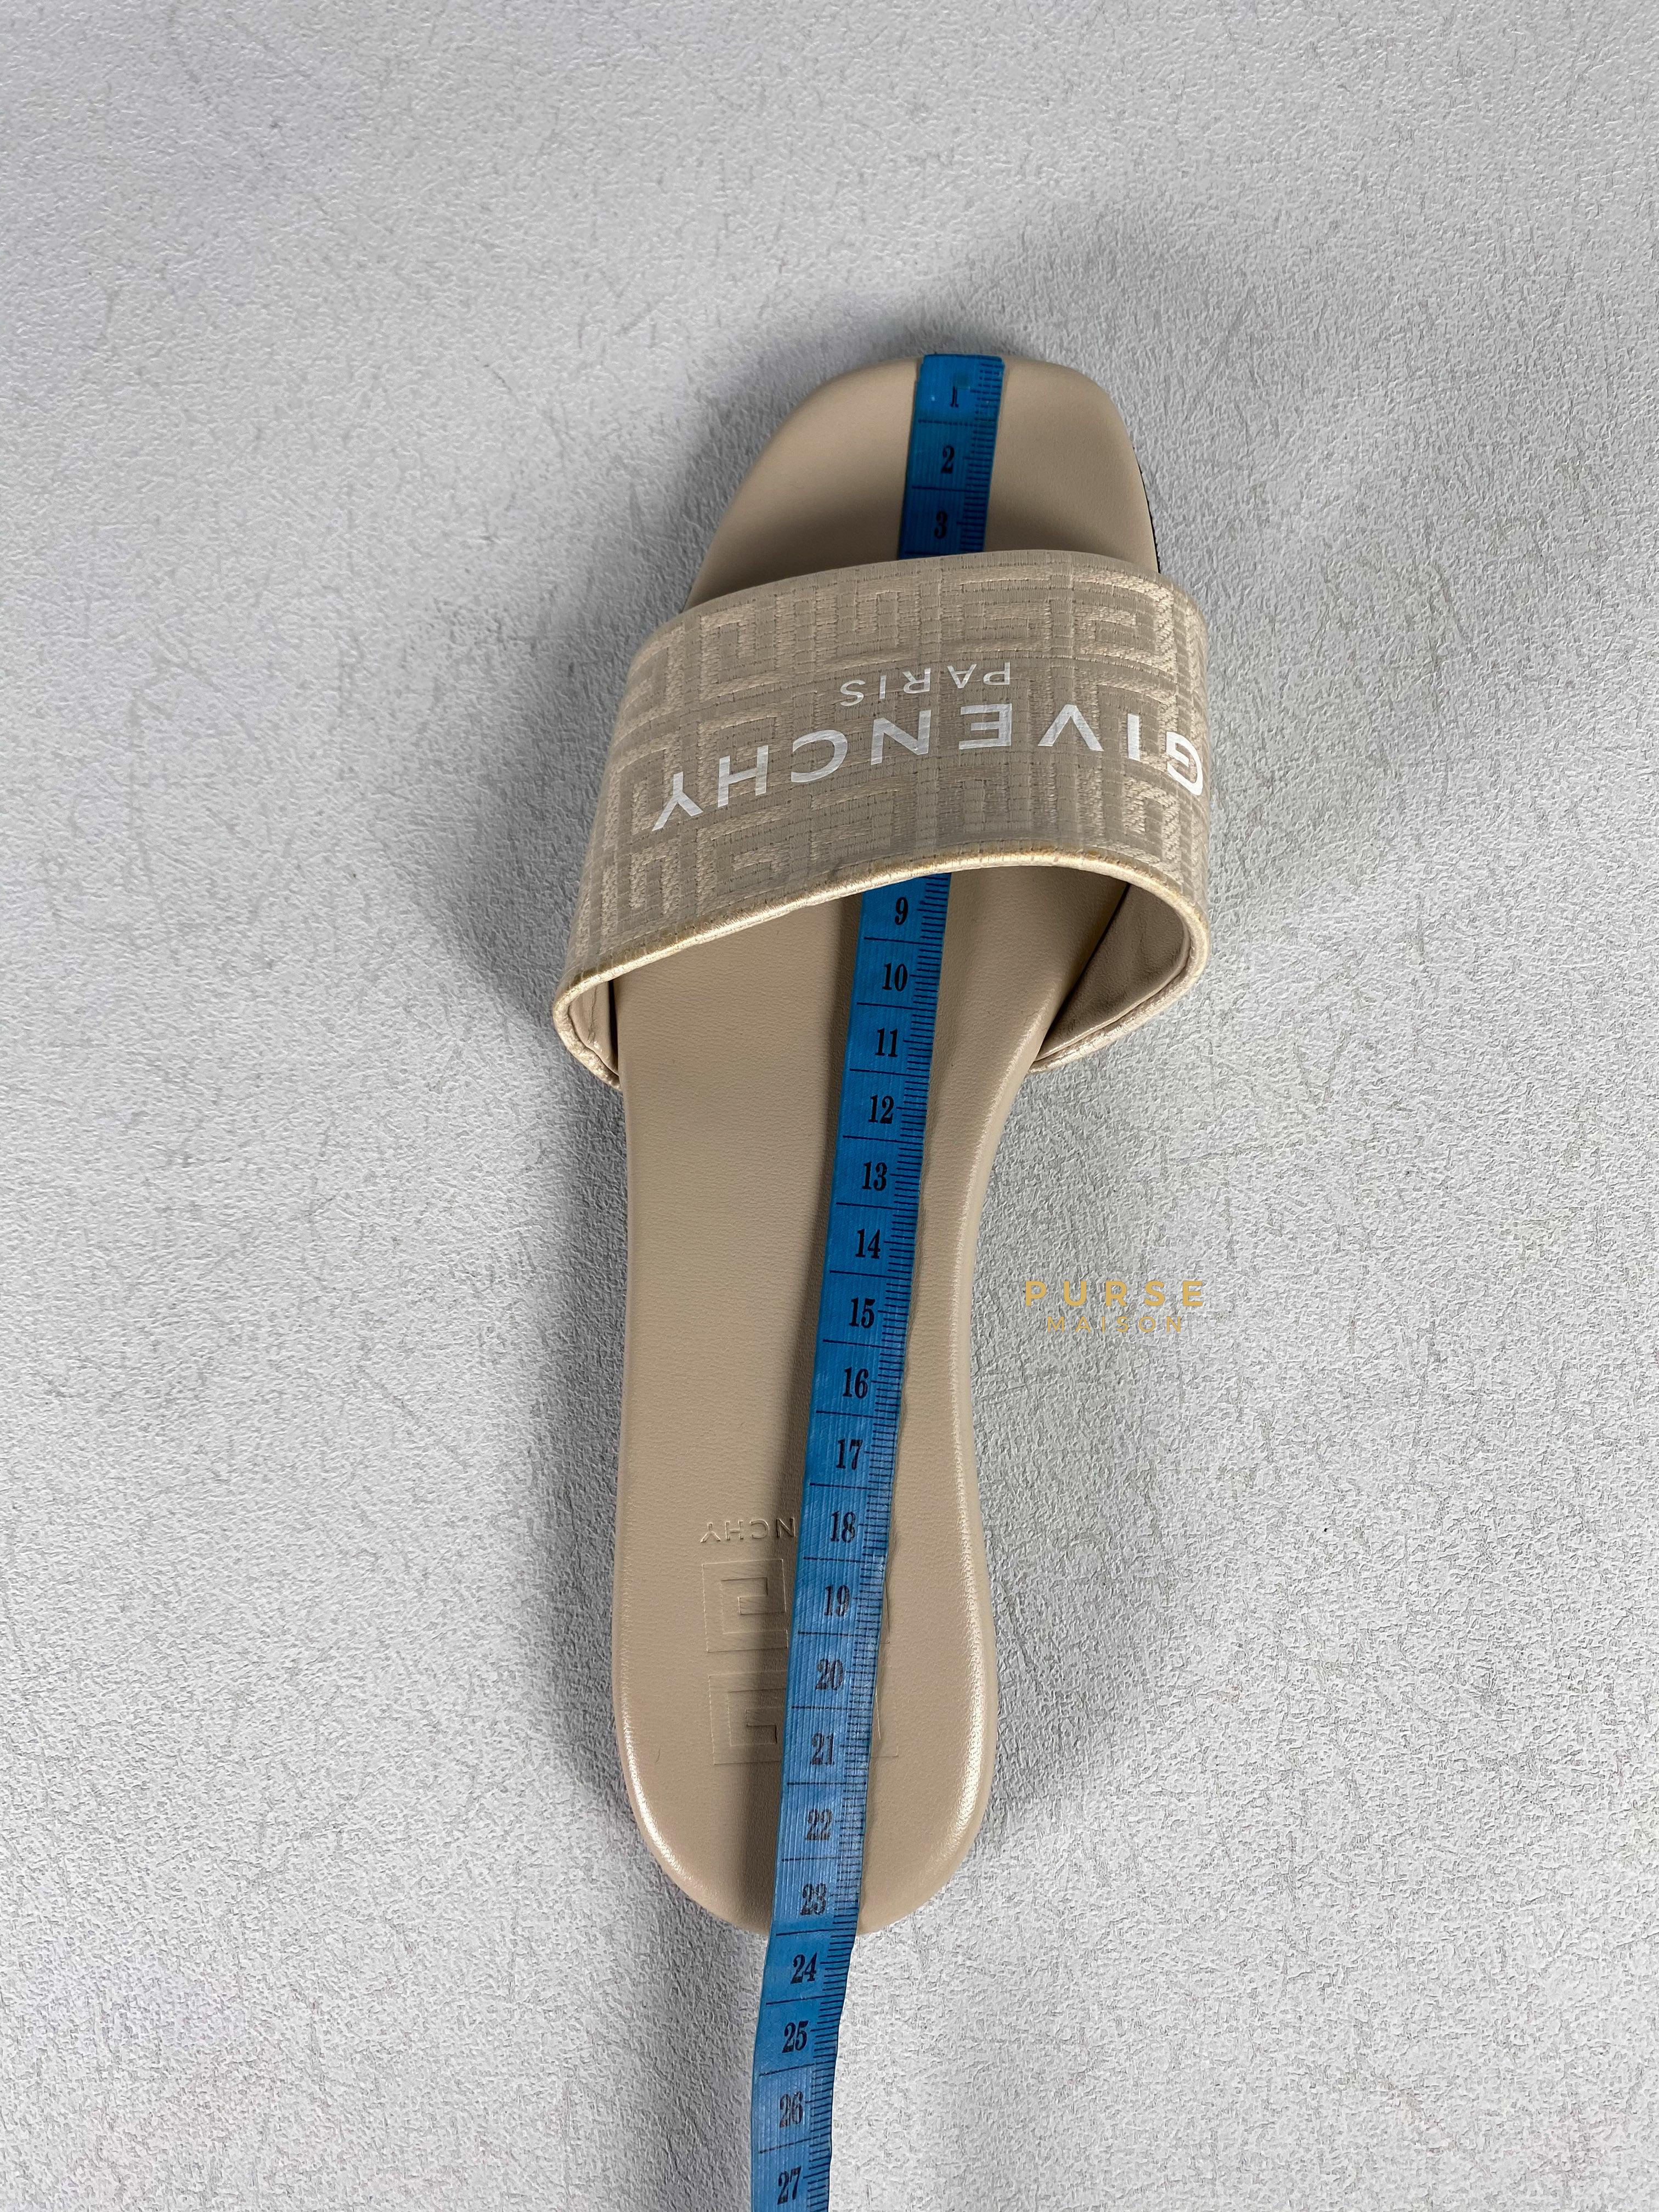 Givenchy 4G Logo Coated Canvas Slide Sandals in Natural Beige Size 36 EU | Purse Maison Luxury Bags Shop